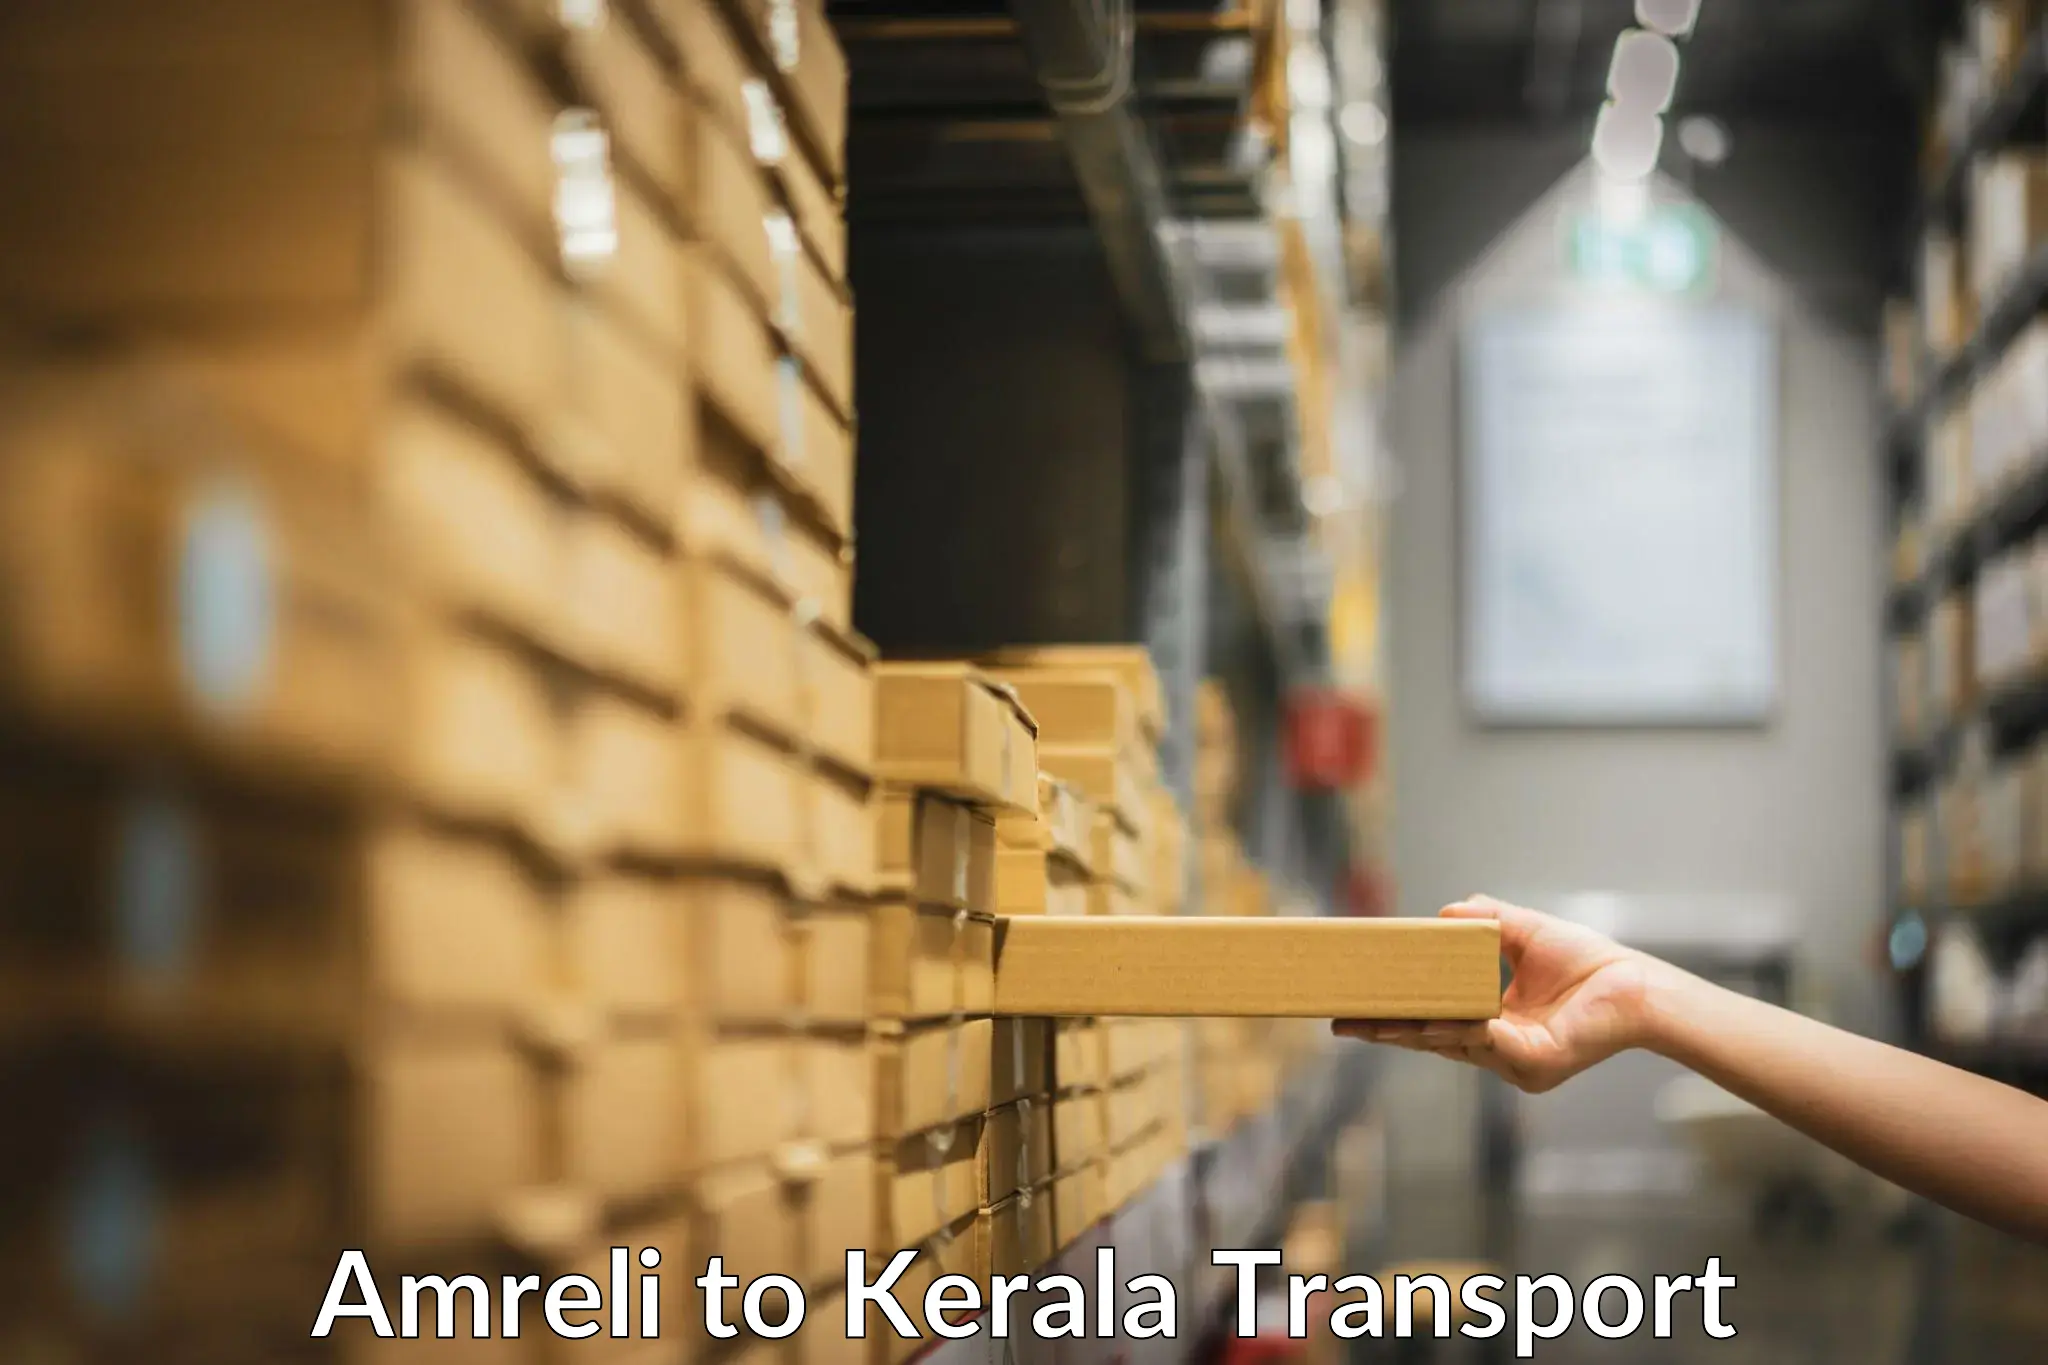 Furniture transport service Amreli to Calicut